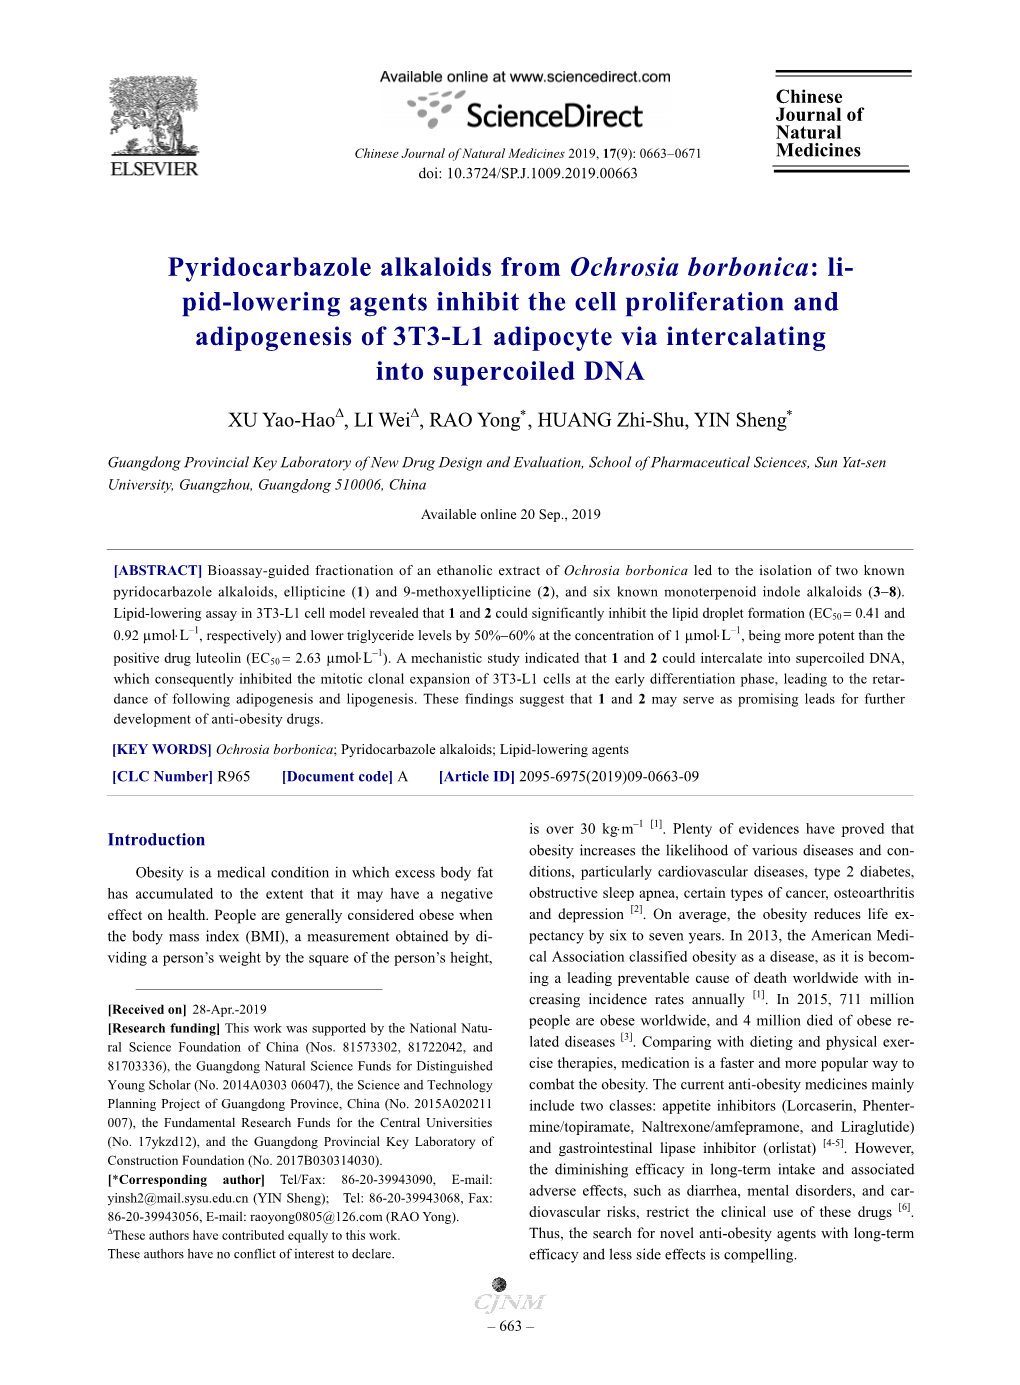 Pyridocarbazole Alkaloids from Ochrosia Borbonica: Li- Pid-Lowering